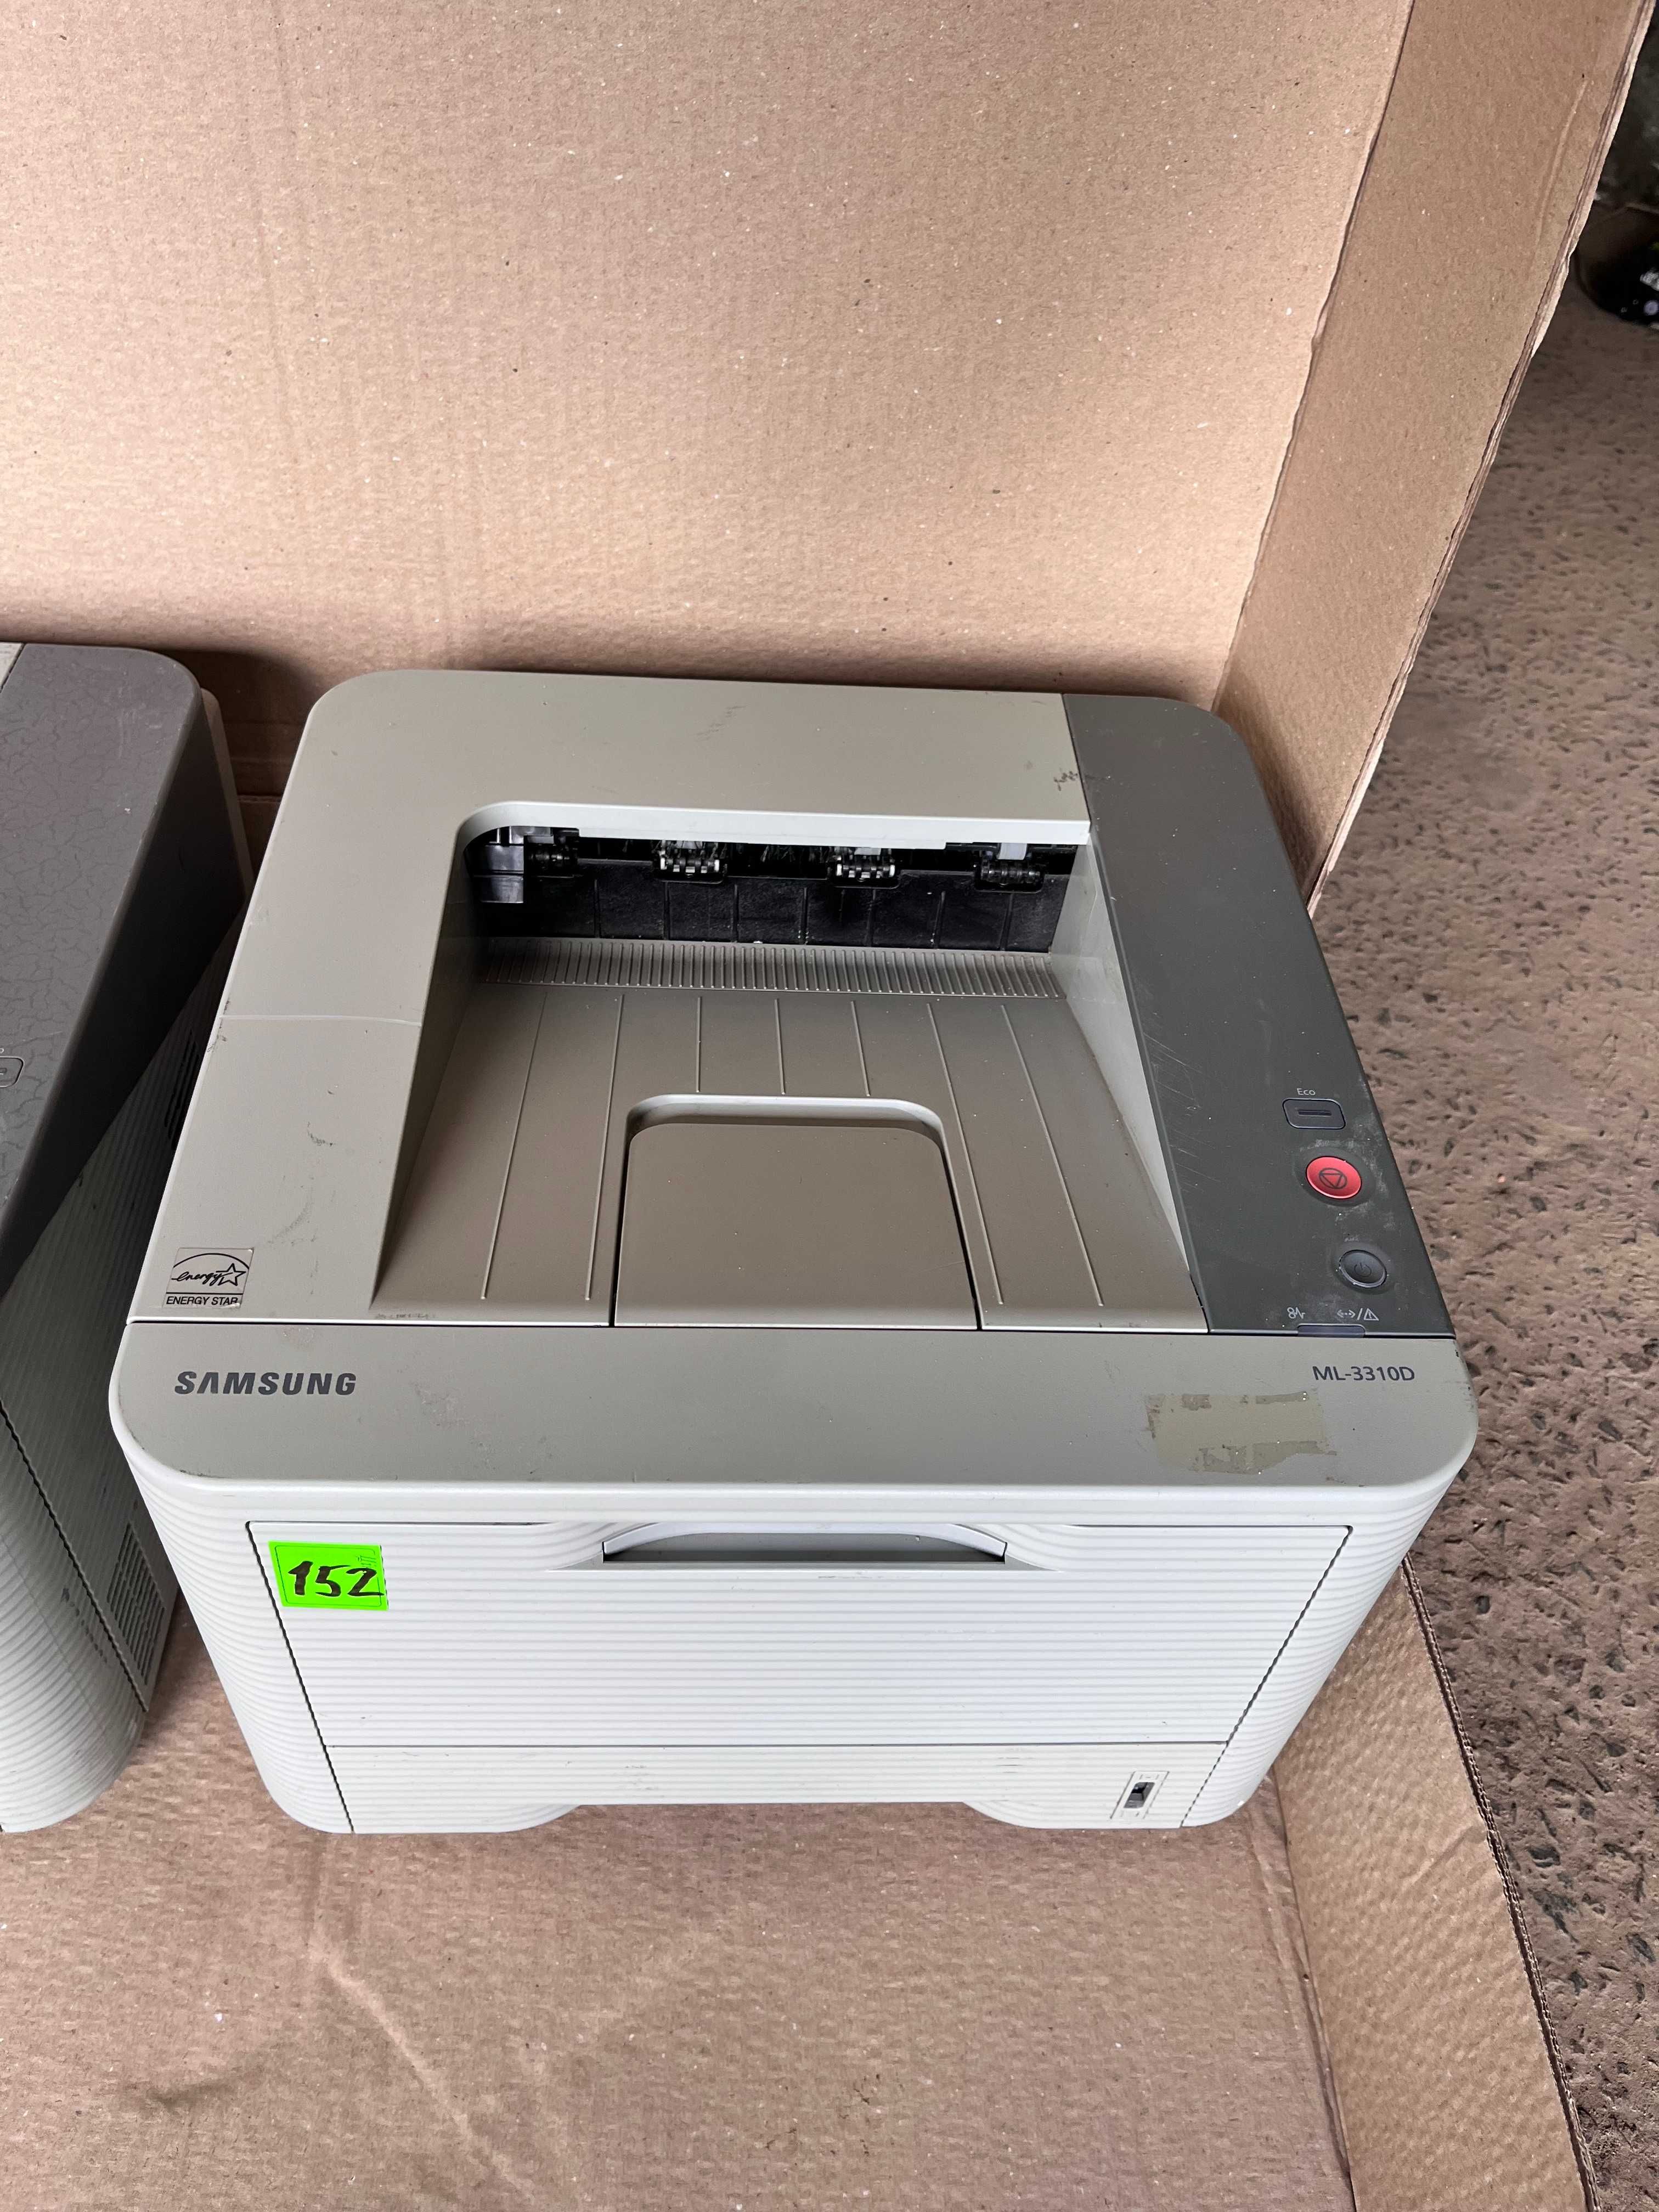 Принтер Samsung ML 3310D